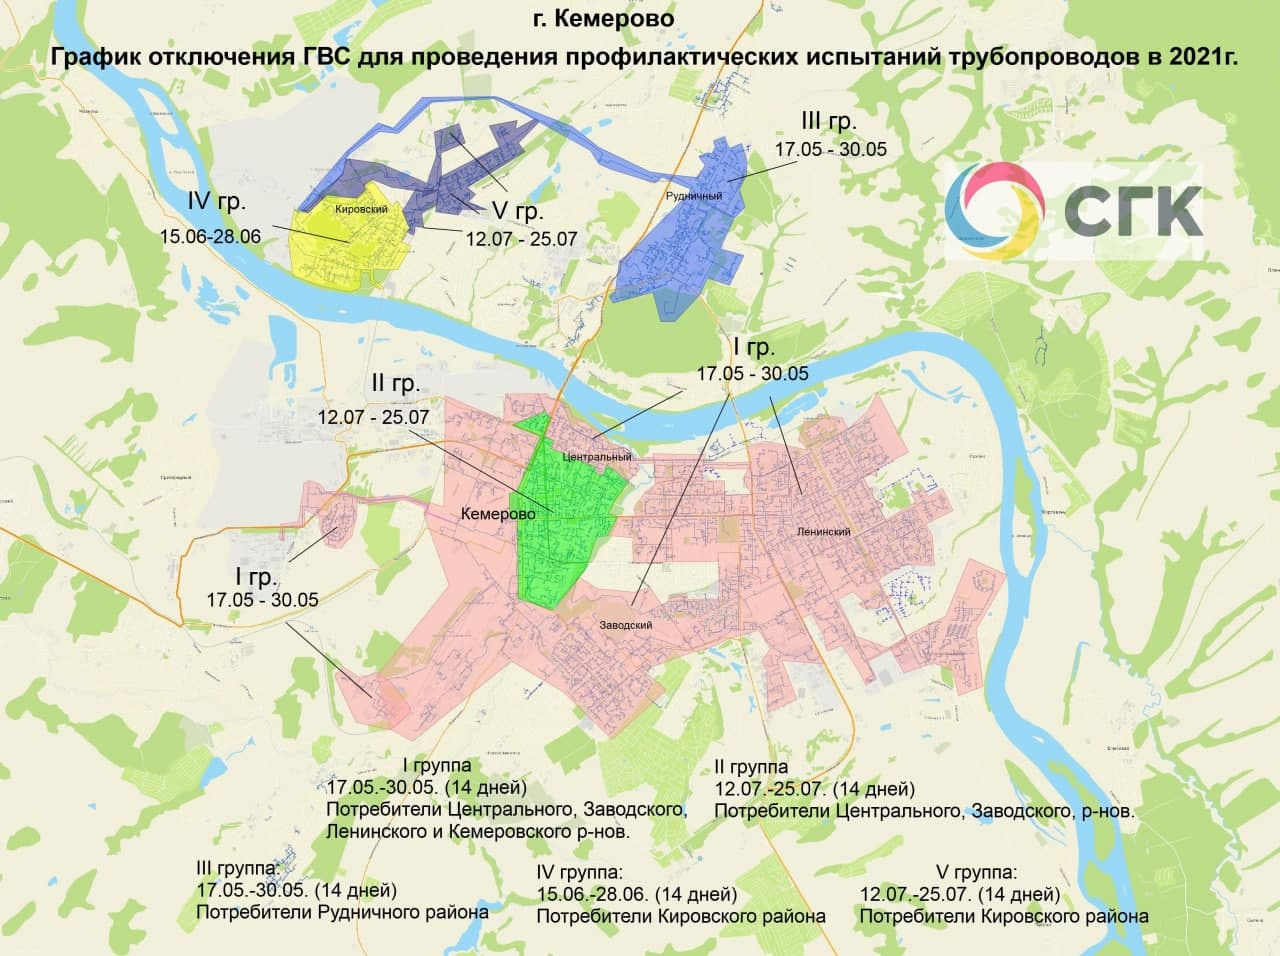 фото карта кемерово